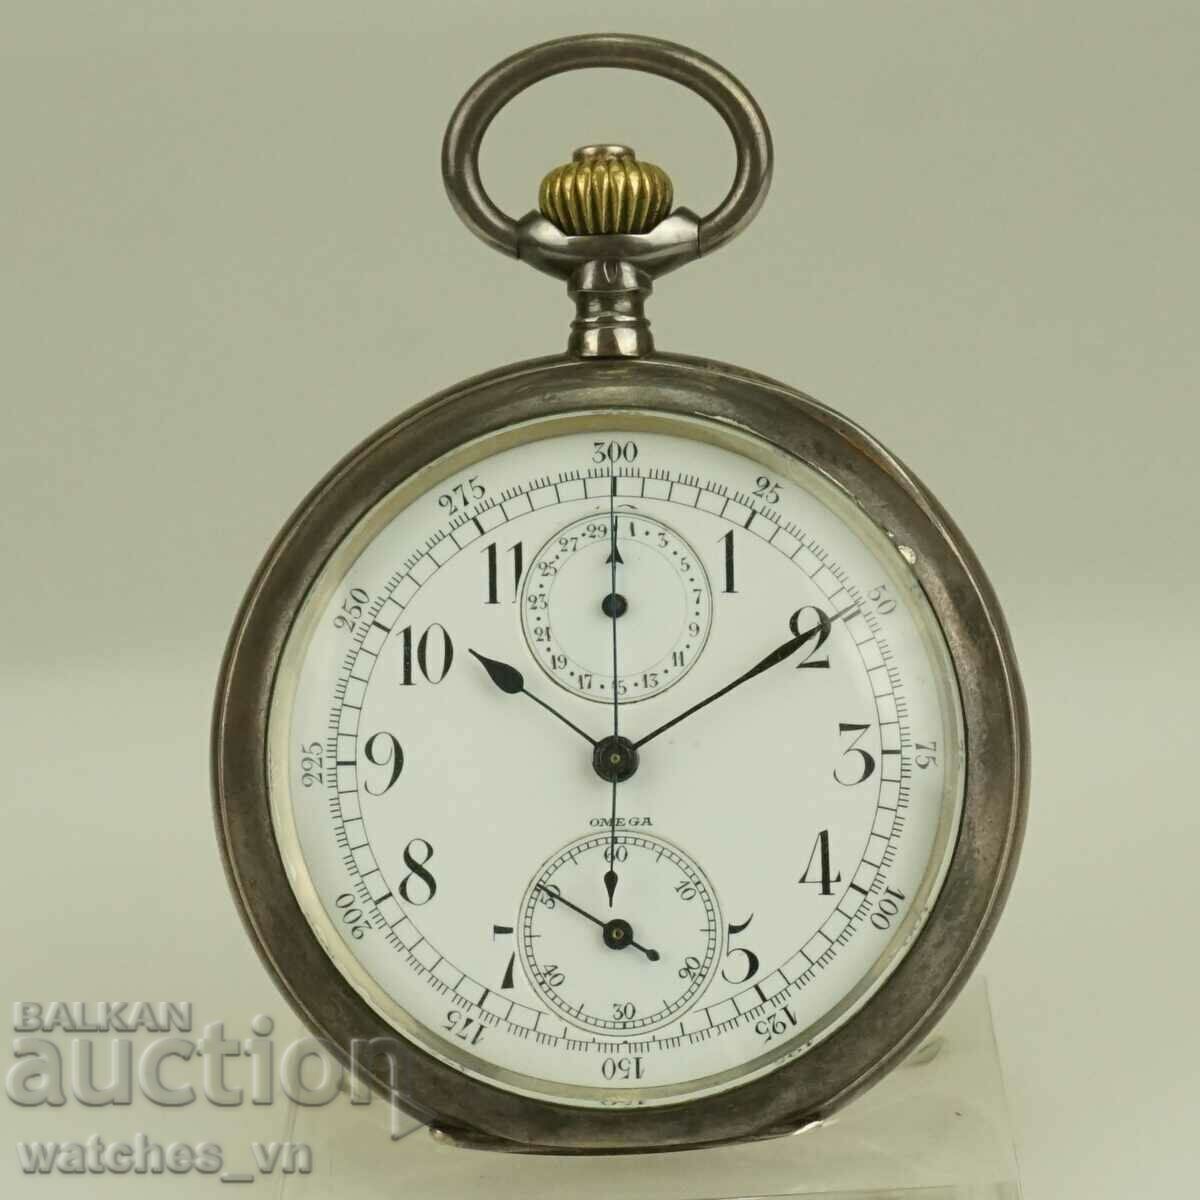 5.5 cm Chronograph OMEGA Silver Silver pocket watch OMEGA